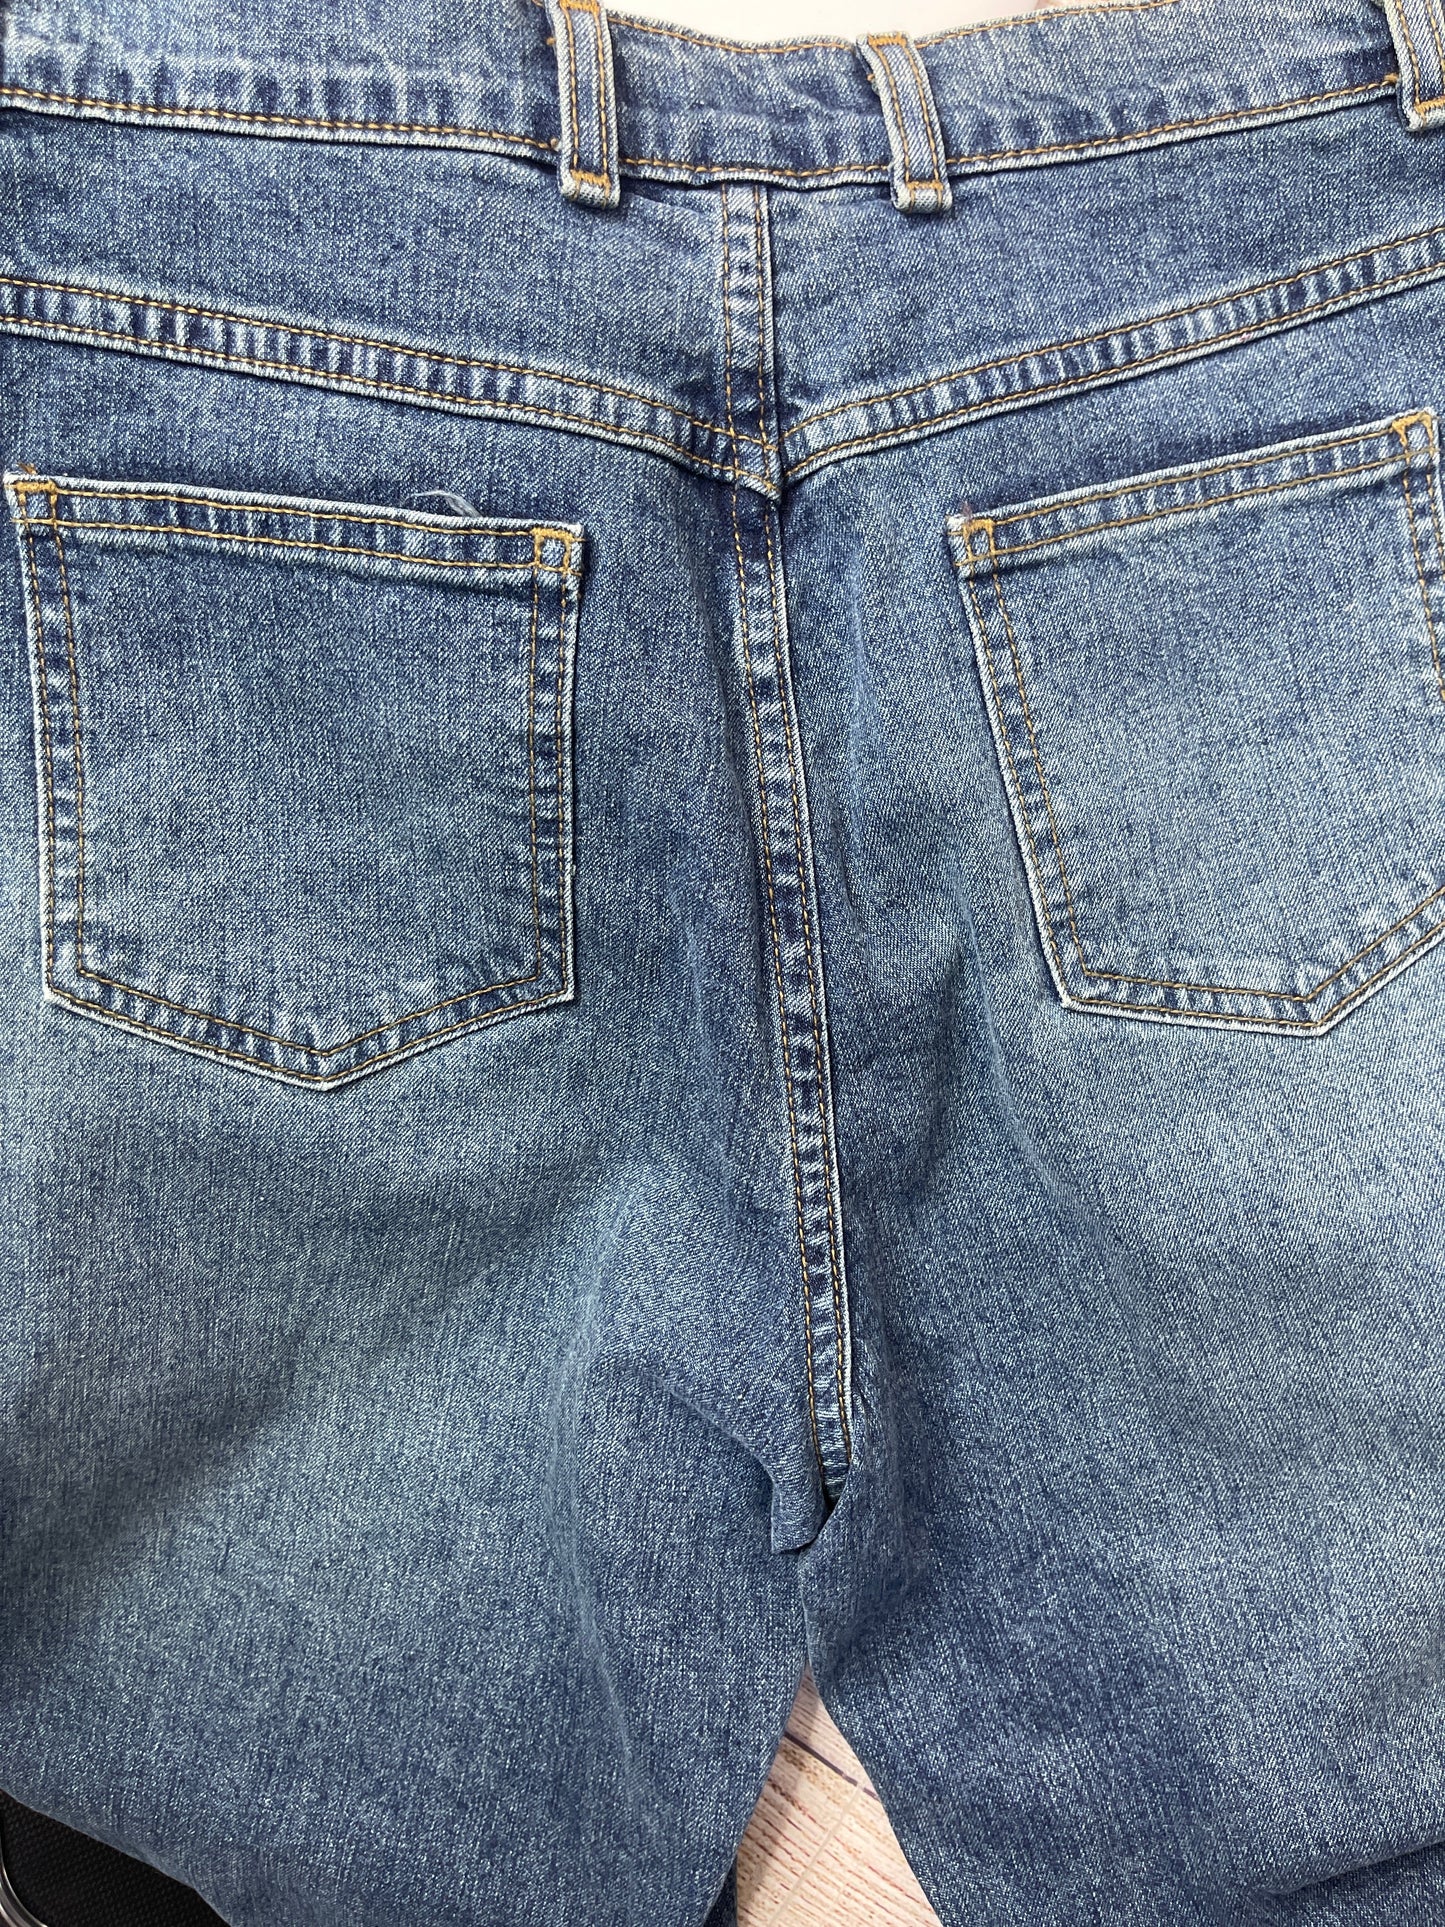 Jeans Designer By St. John  Size: 8